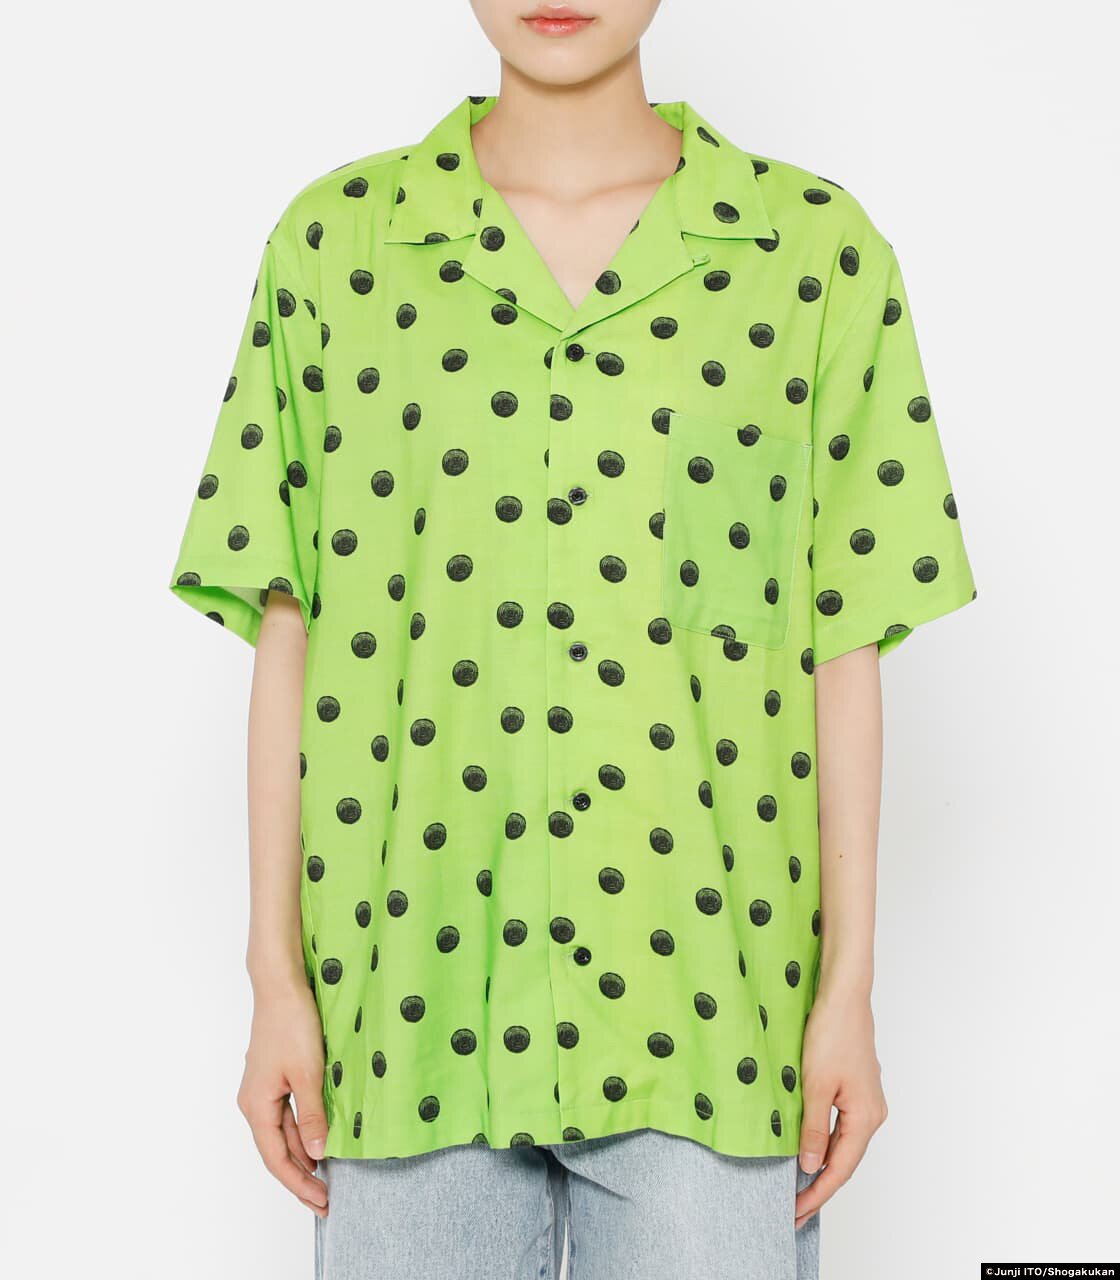 Junji Ito R4G Uzumaki Dots Green Open Collar Shirt